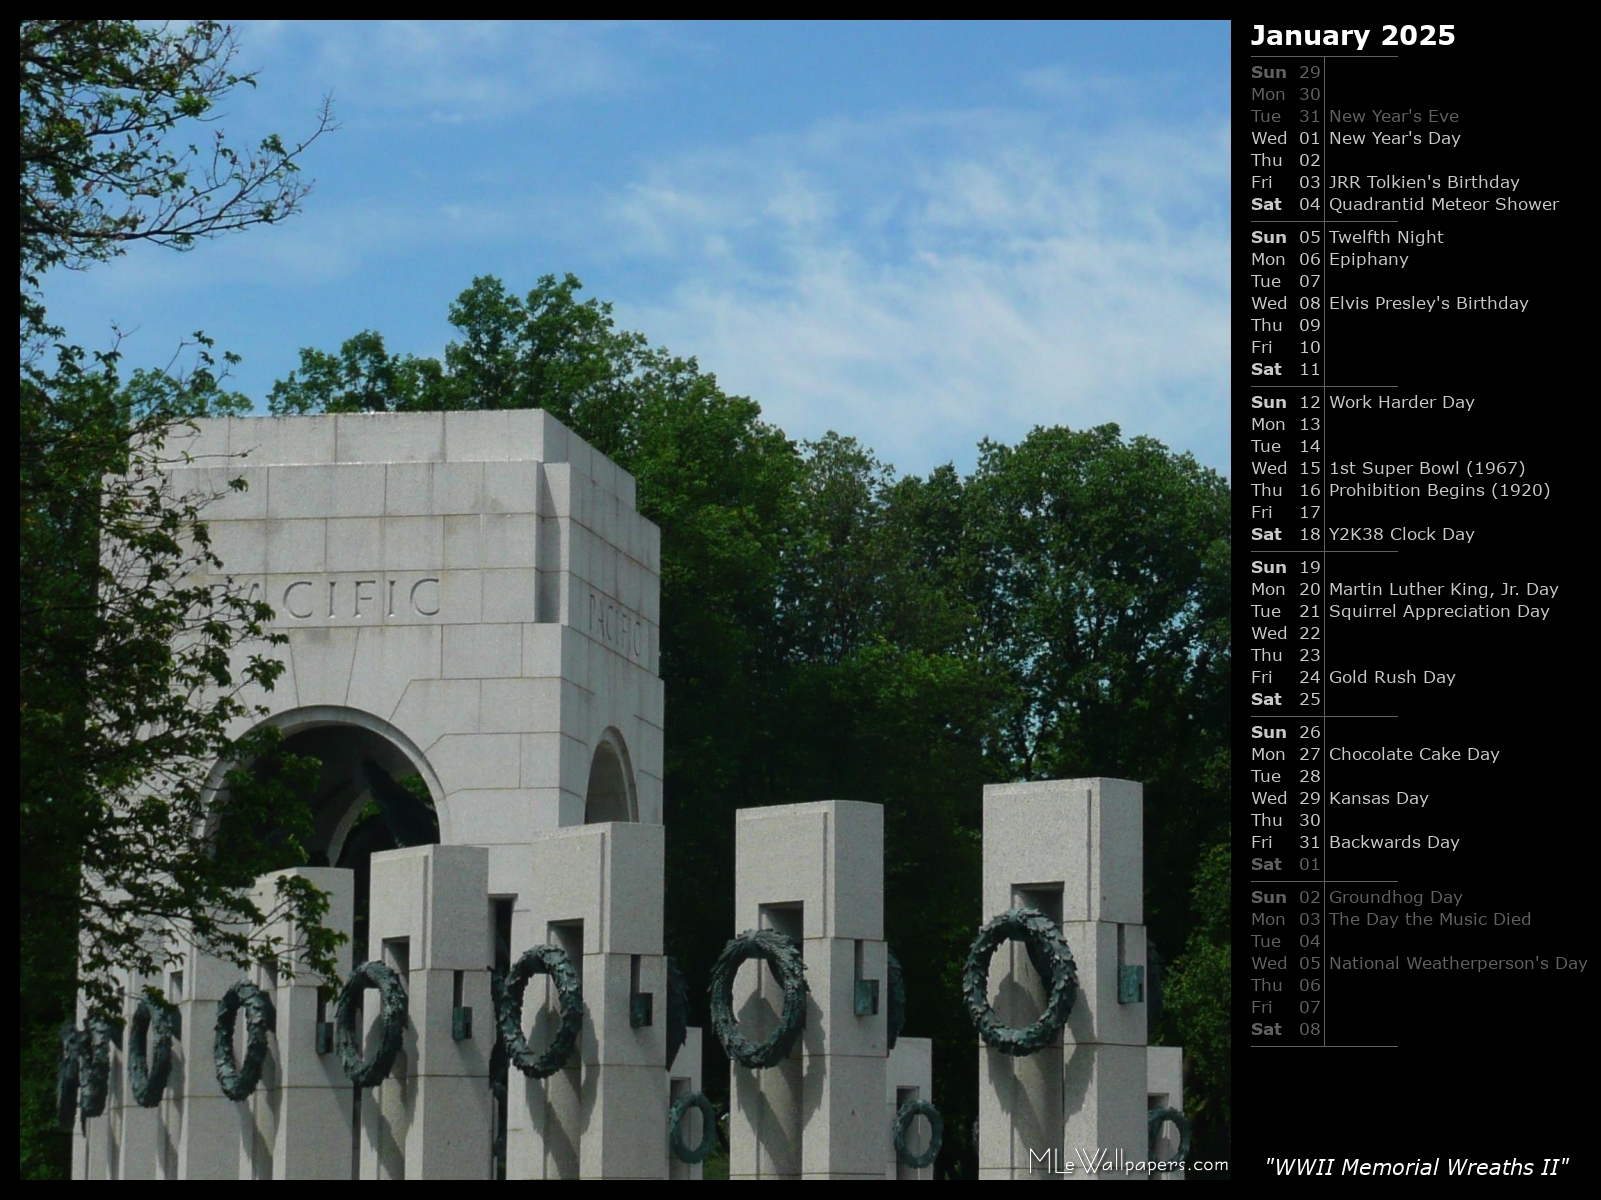 MLeWallpapers.com - WWII Memorial Wreaths II (Calendar)